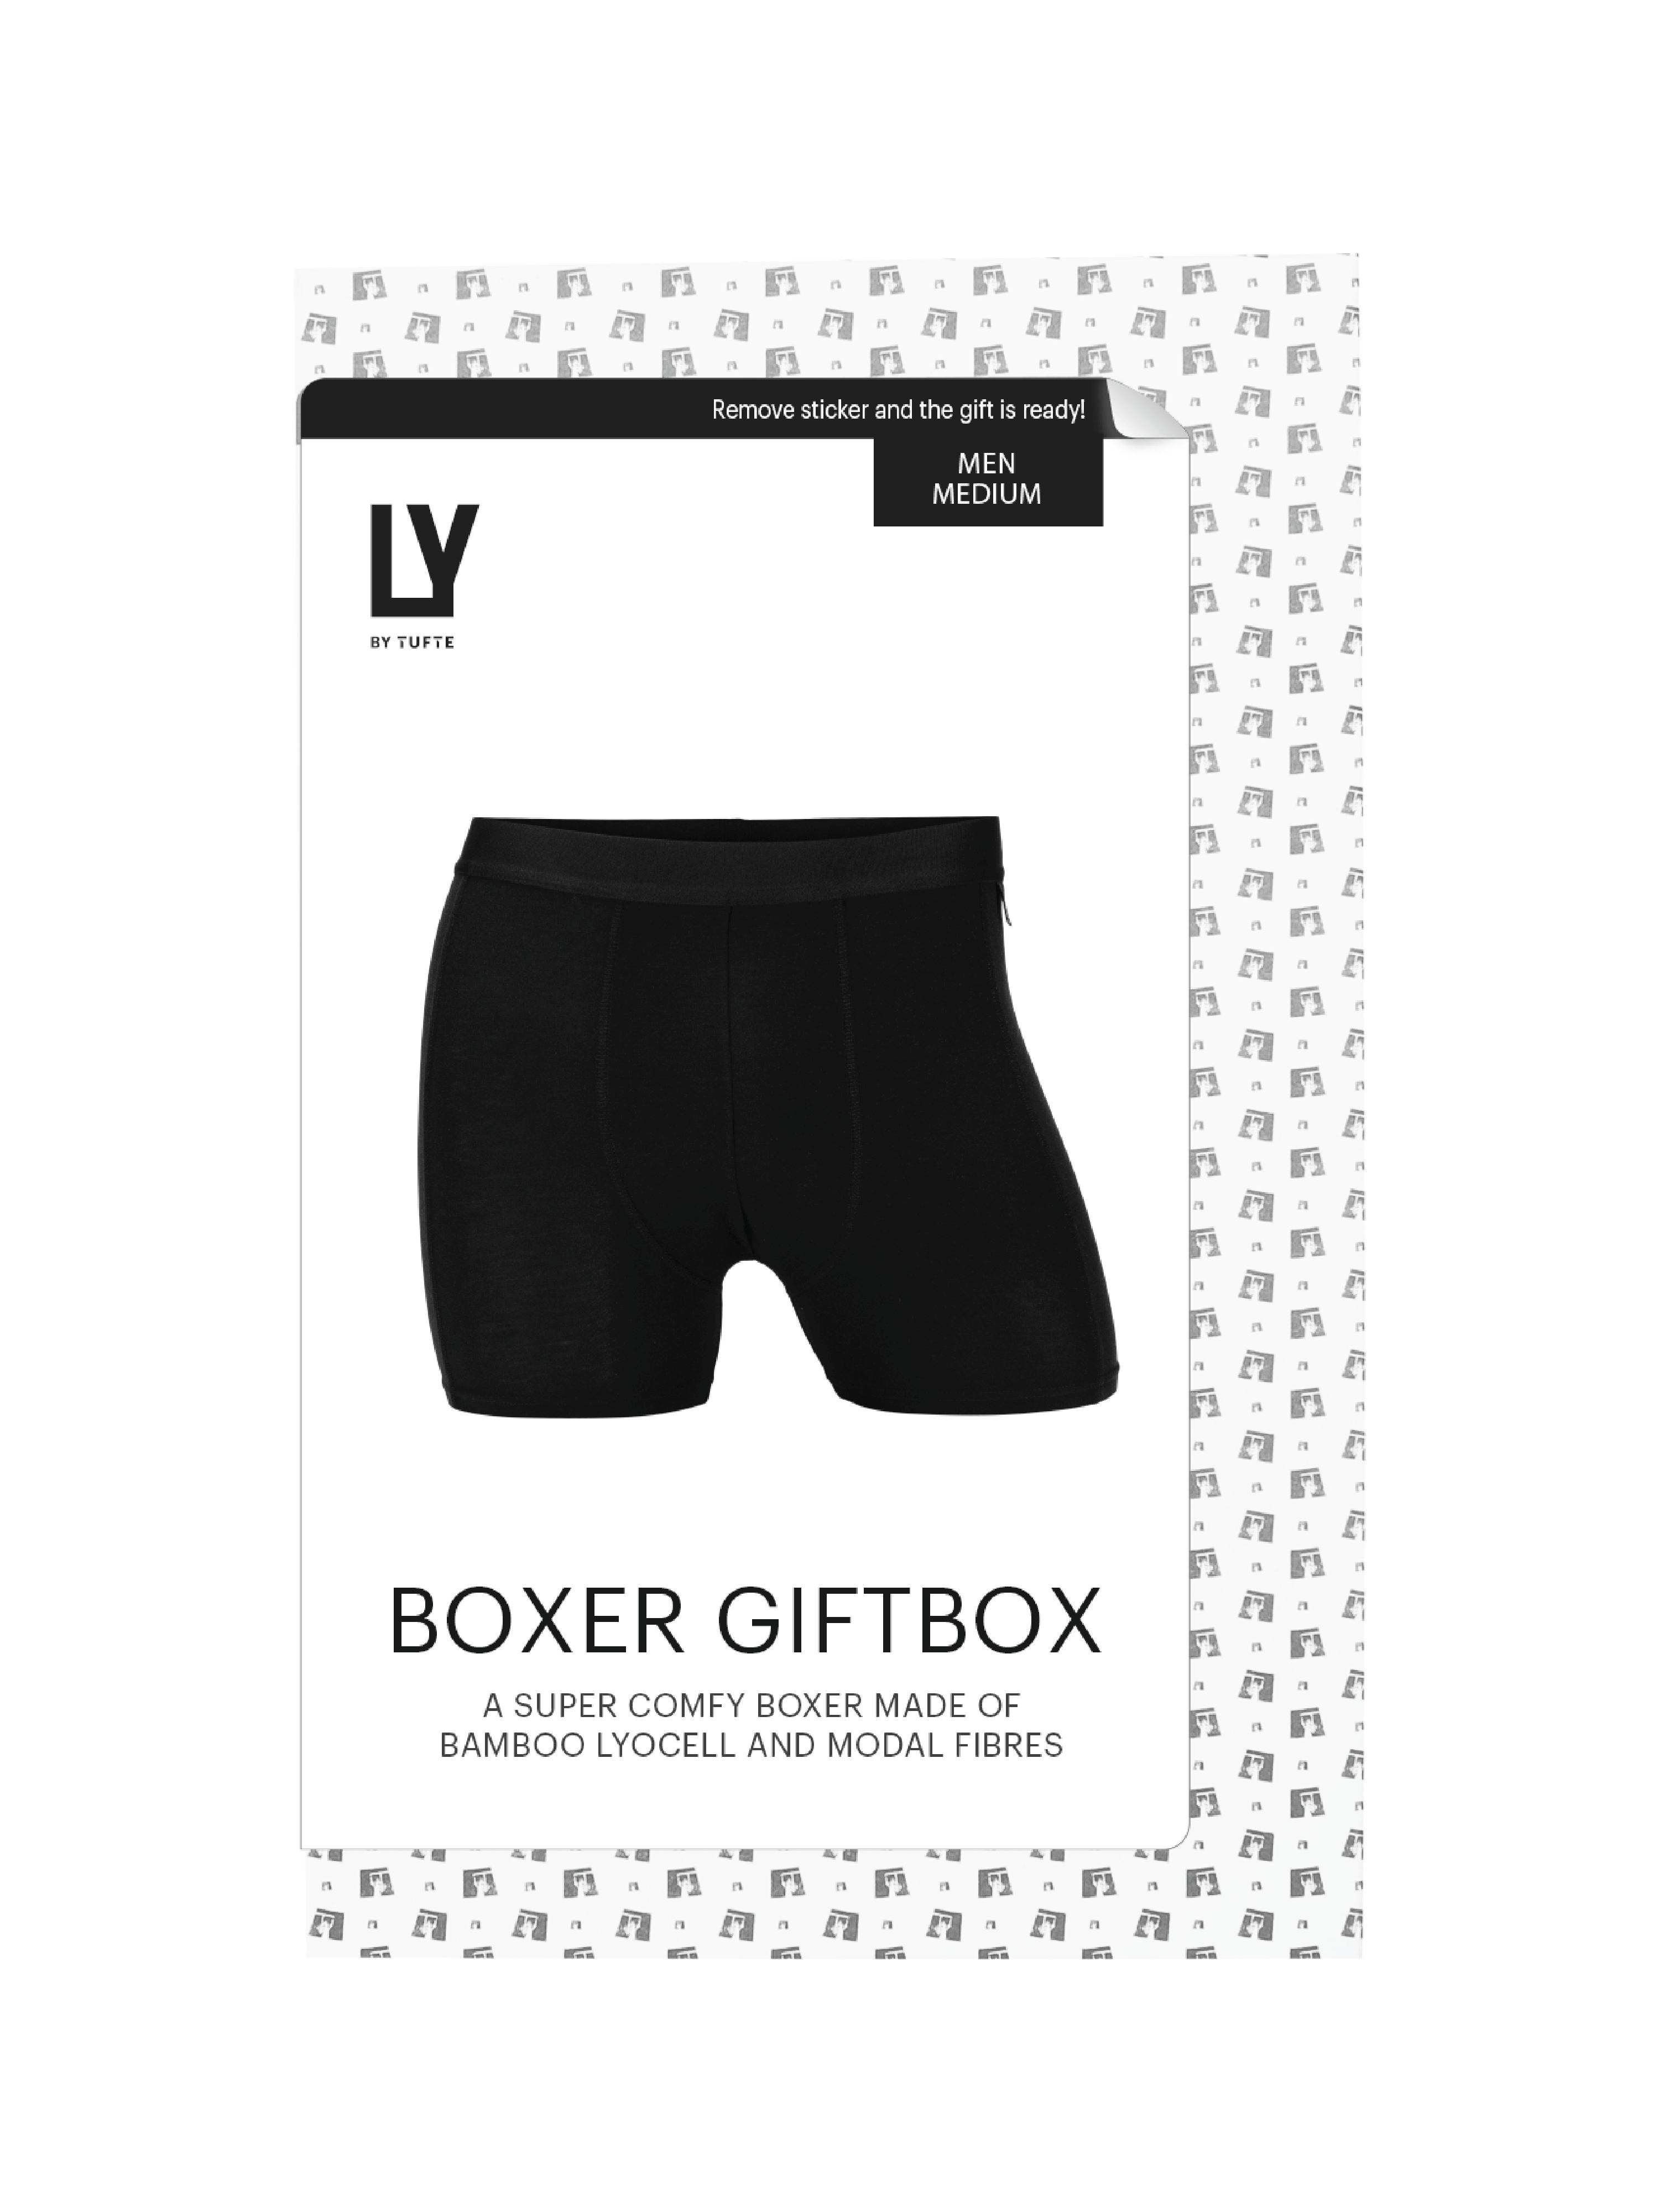 LY by Tufte Boxer Giftbox Black, Størrelse L, 1 stk.